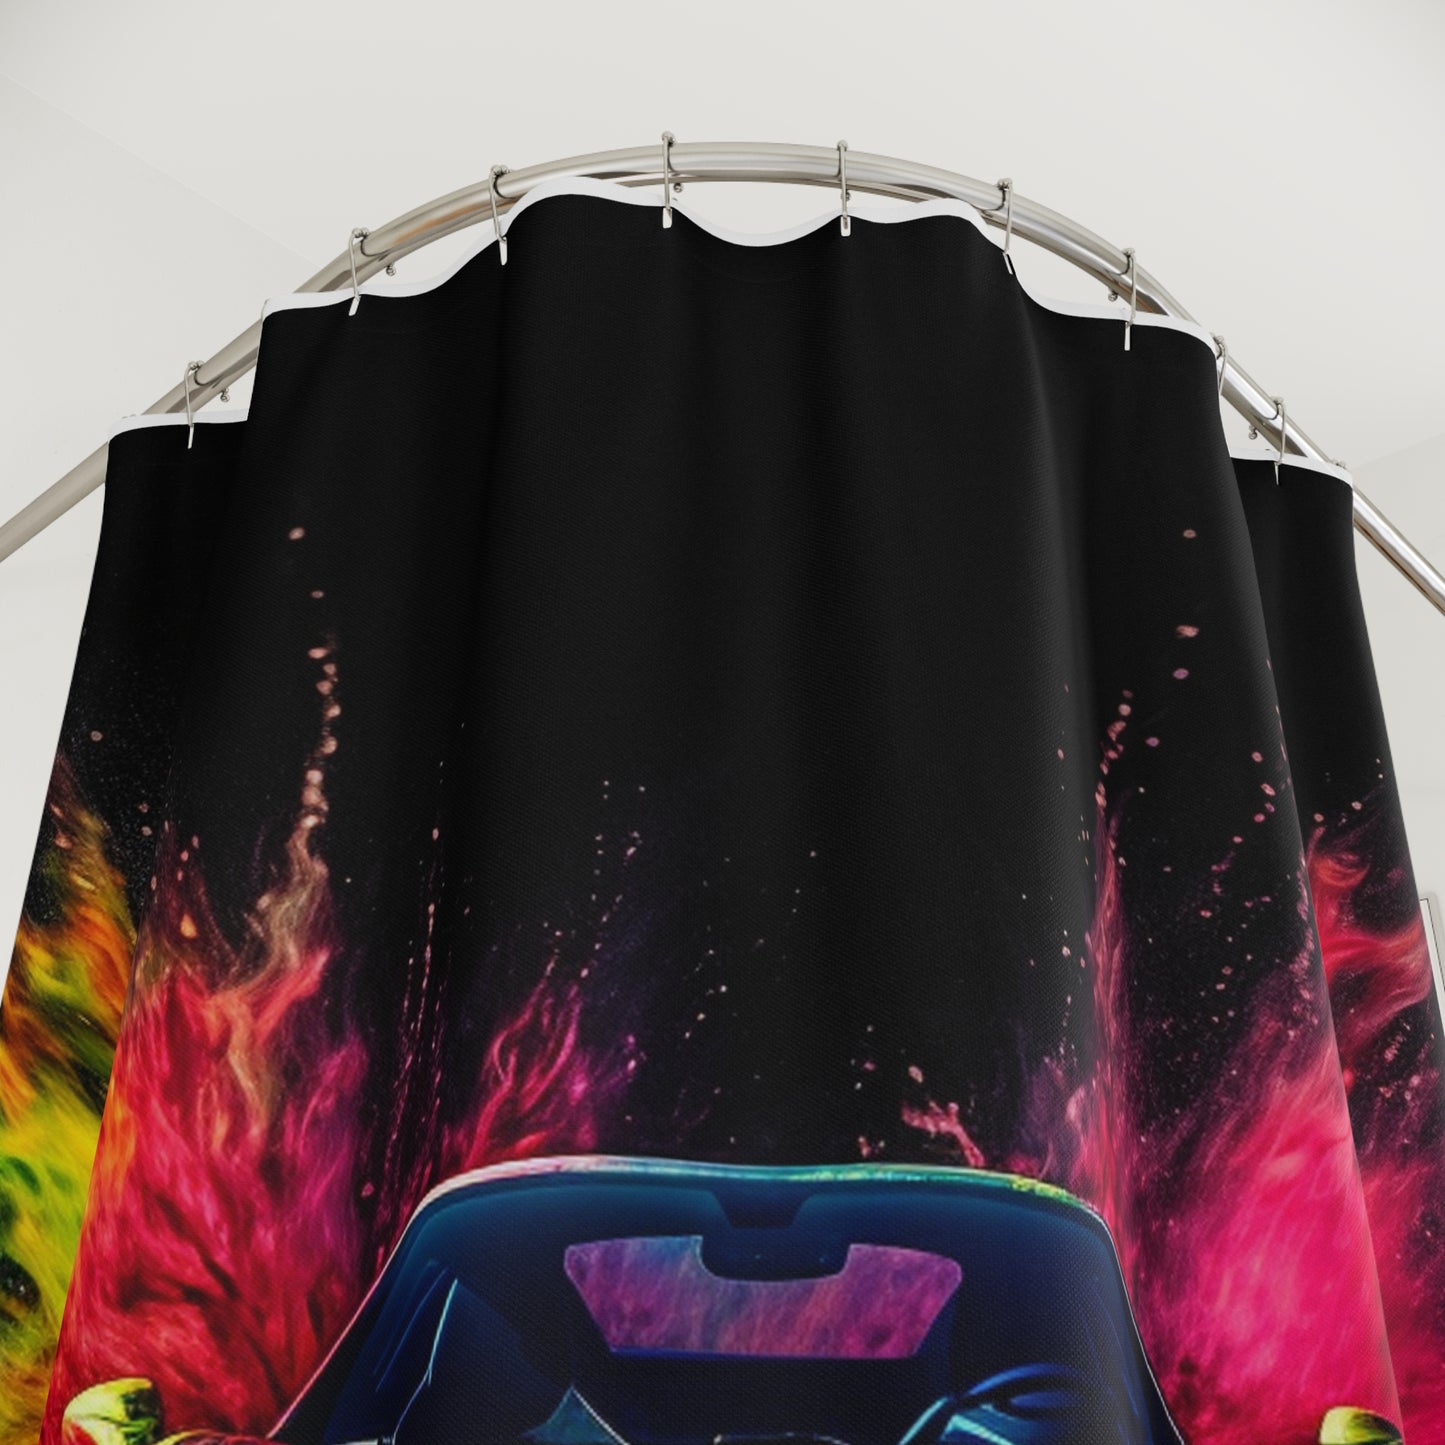 Polyester Shower Curtain Farrari Water 2